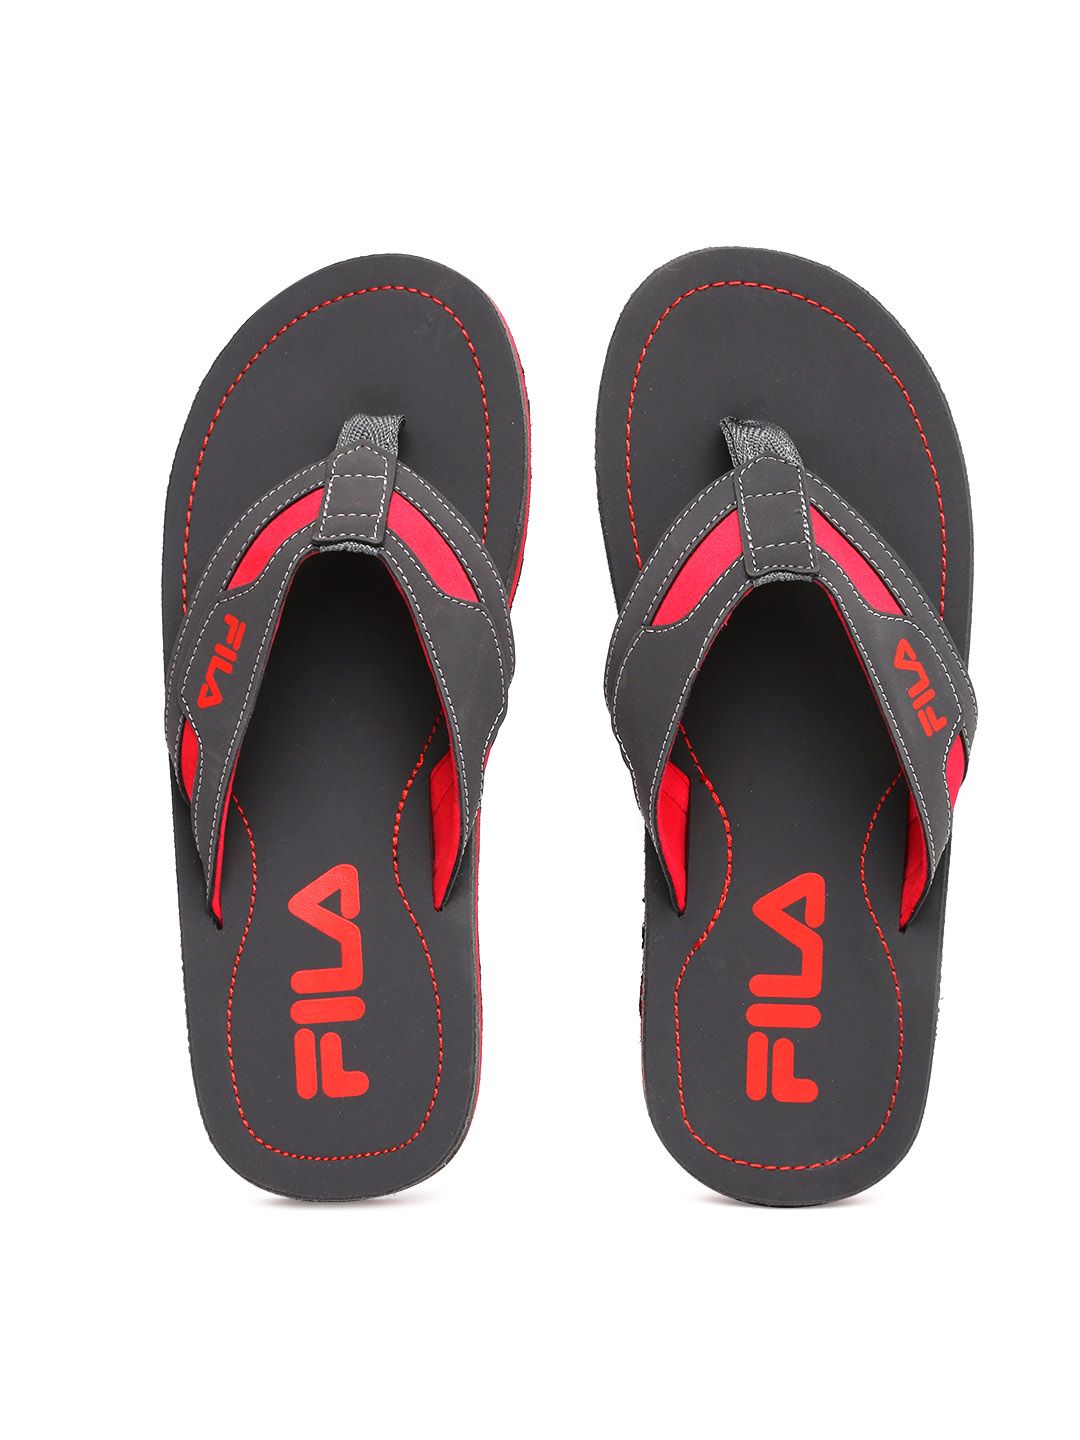 Fila Donata Grey Flip Flops for Men online in India at Best price on ...